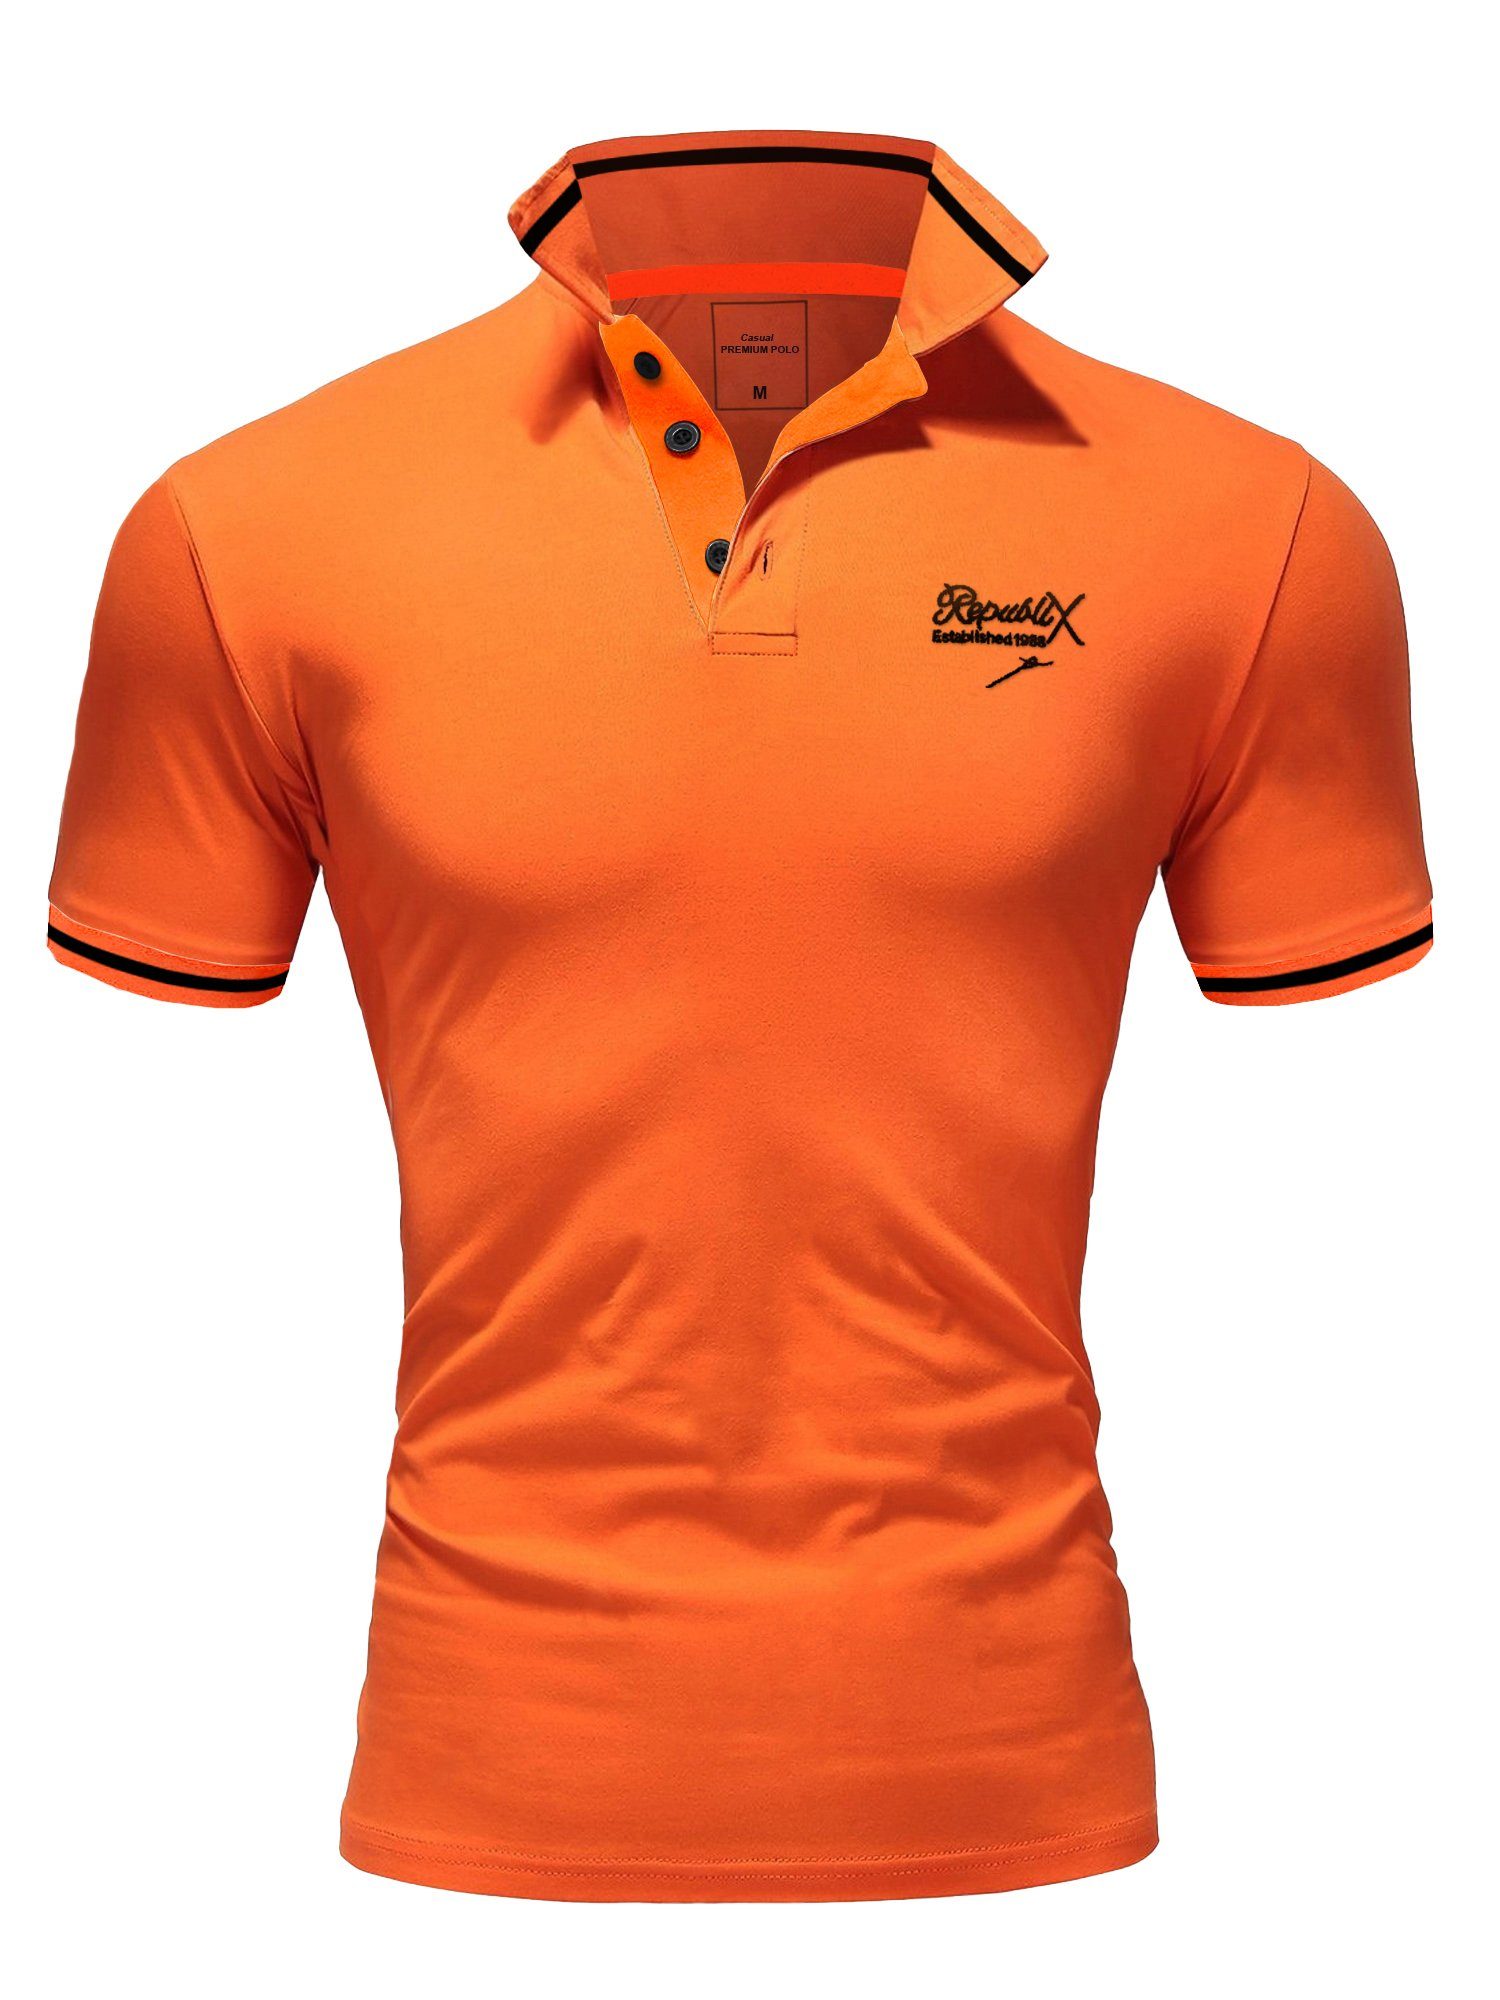 REPUBLIX GABRIEL Kurzarm Basic Orange/Schwarz Hemd Kontrast Herren Polo Poloshirt